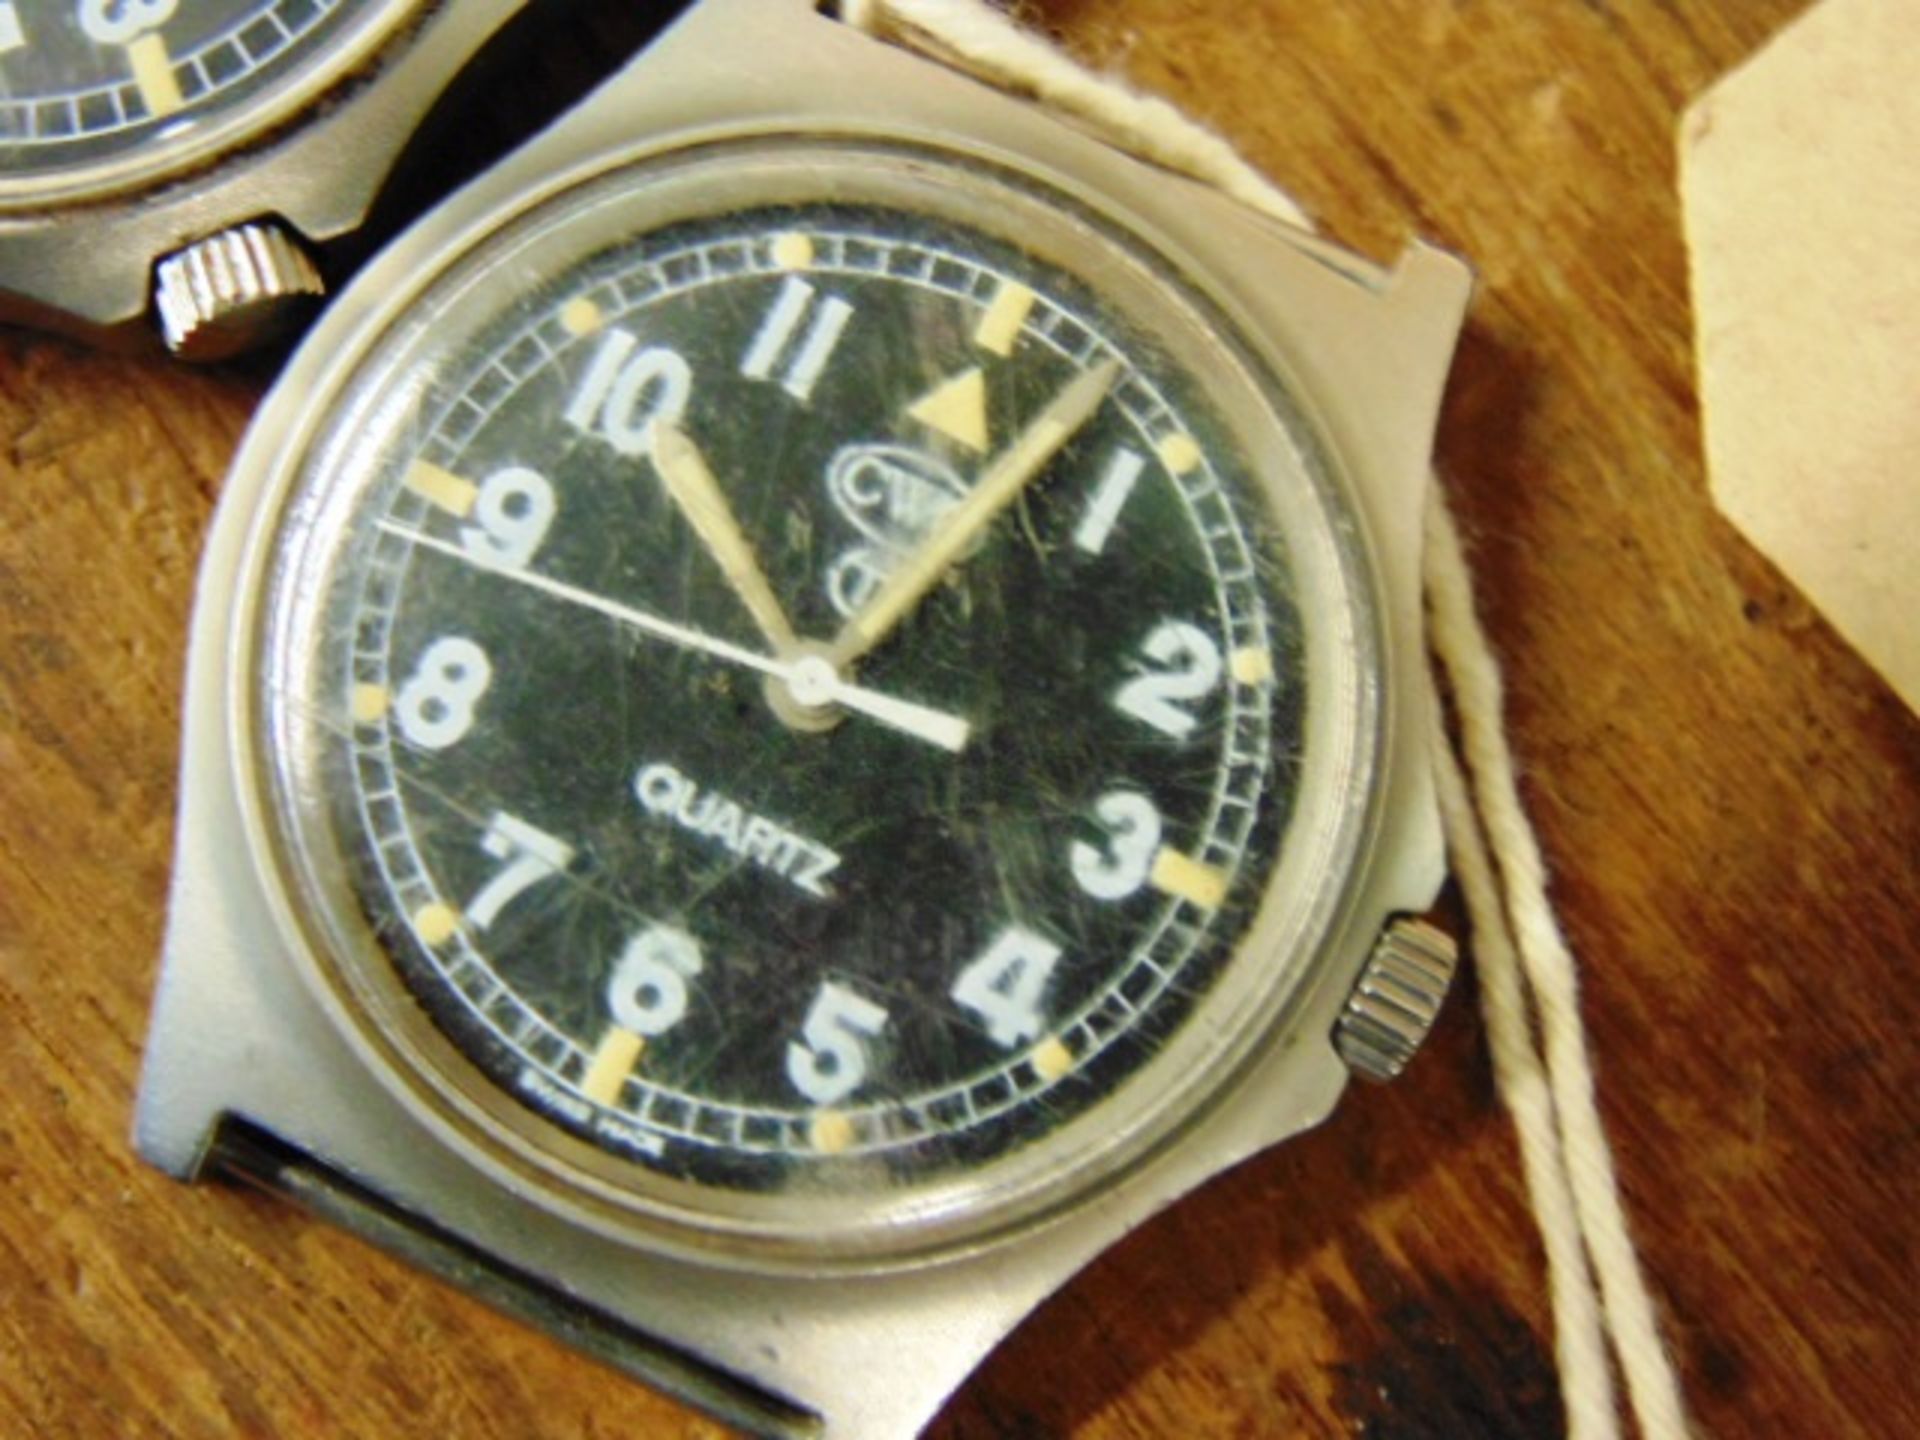 2 x Very Rare Genuine Royal Marines, Navy issue 0555, CWC quartz wrist watches - Image 4 of 5